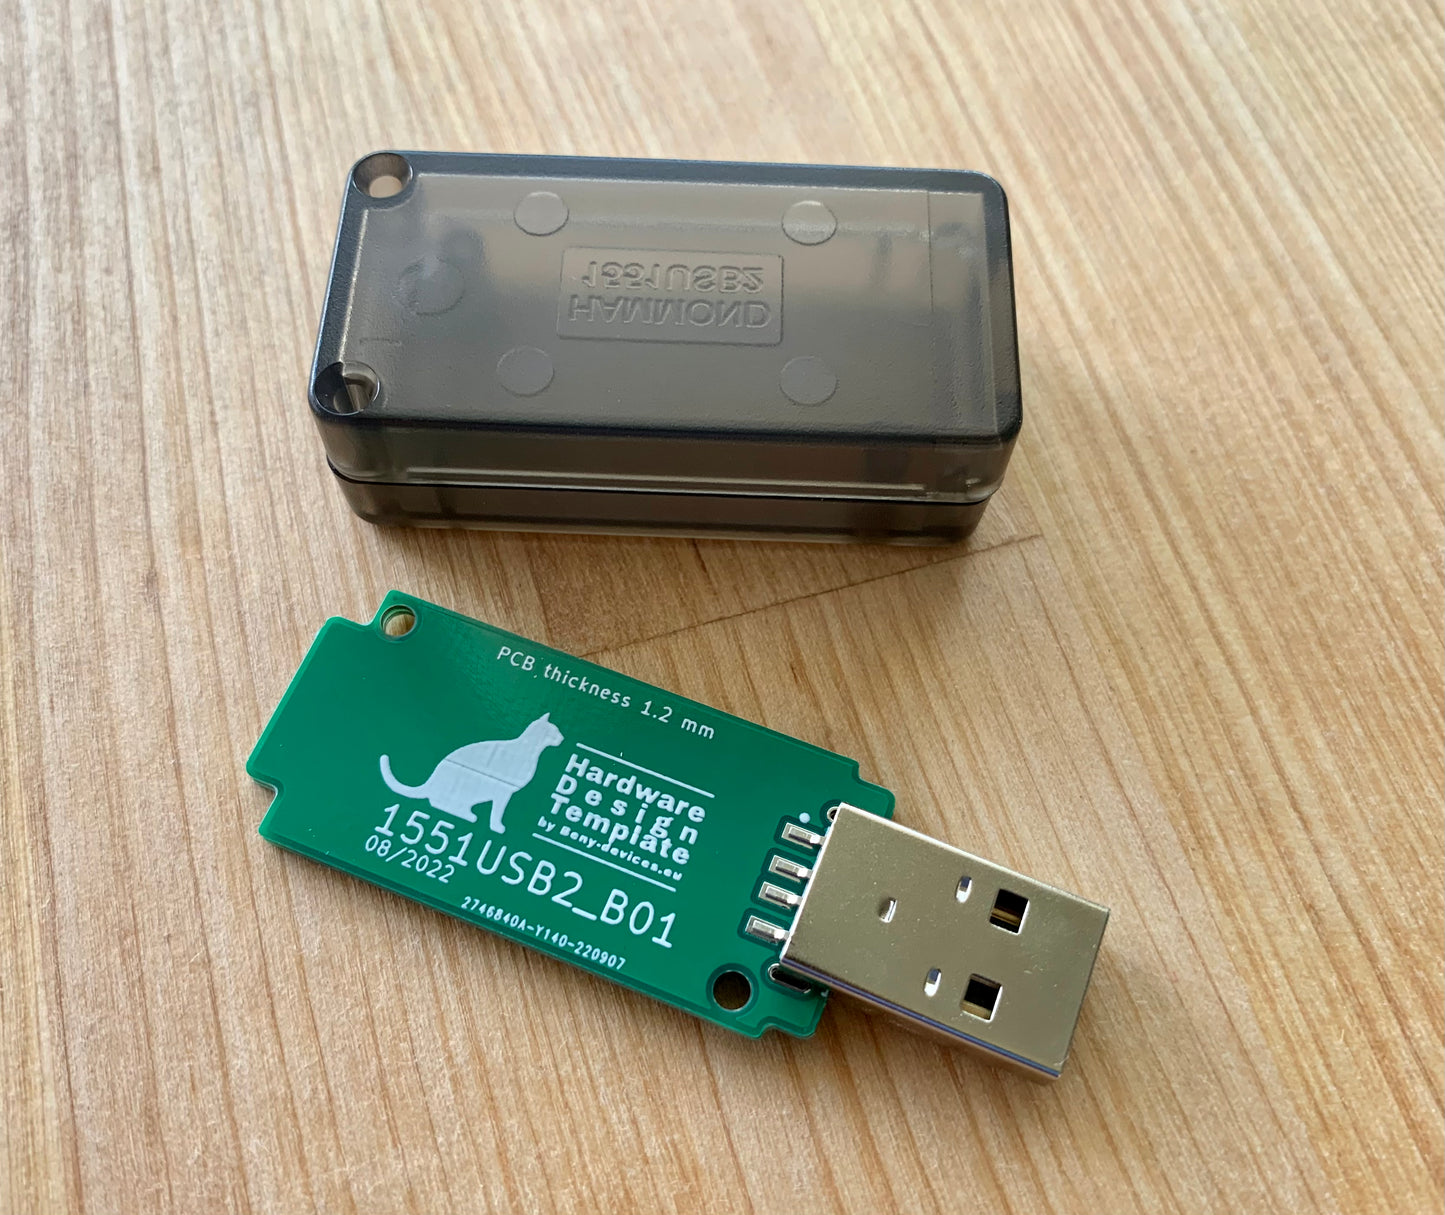 USB key size B